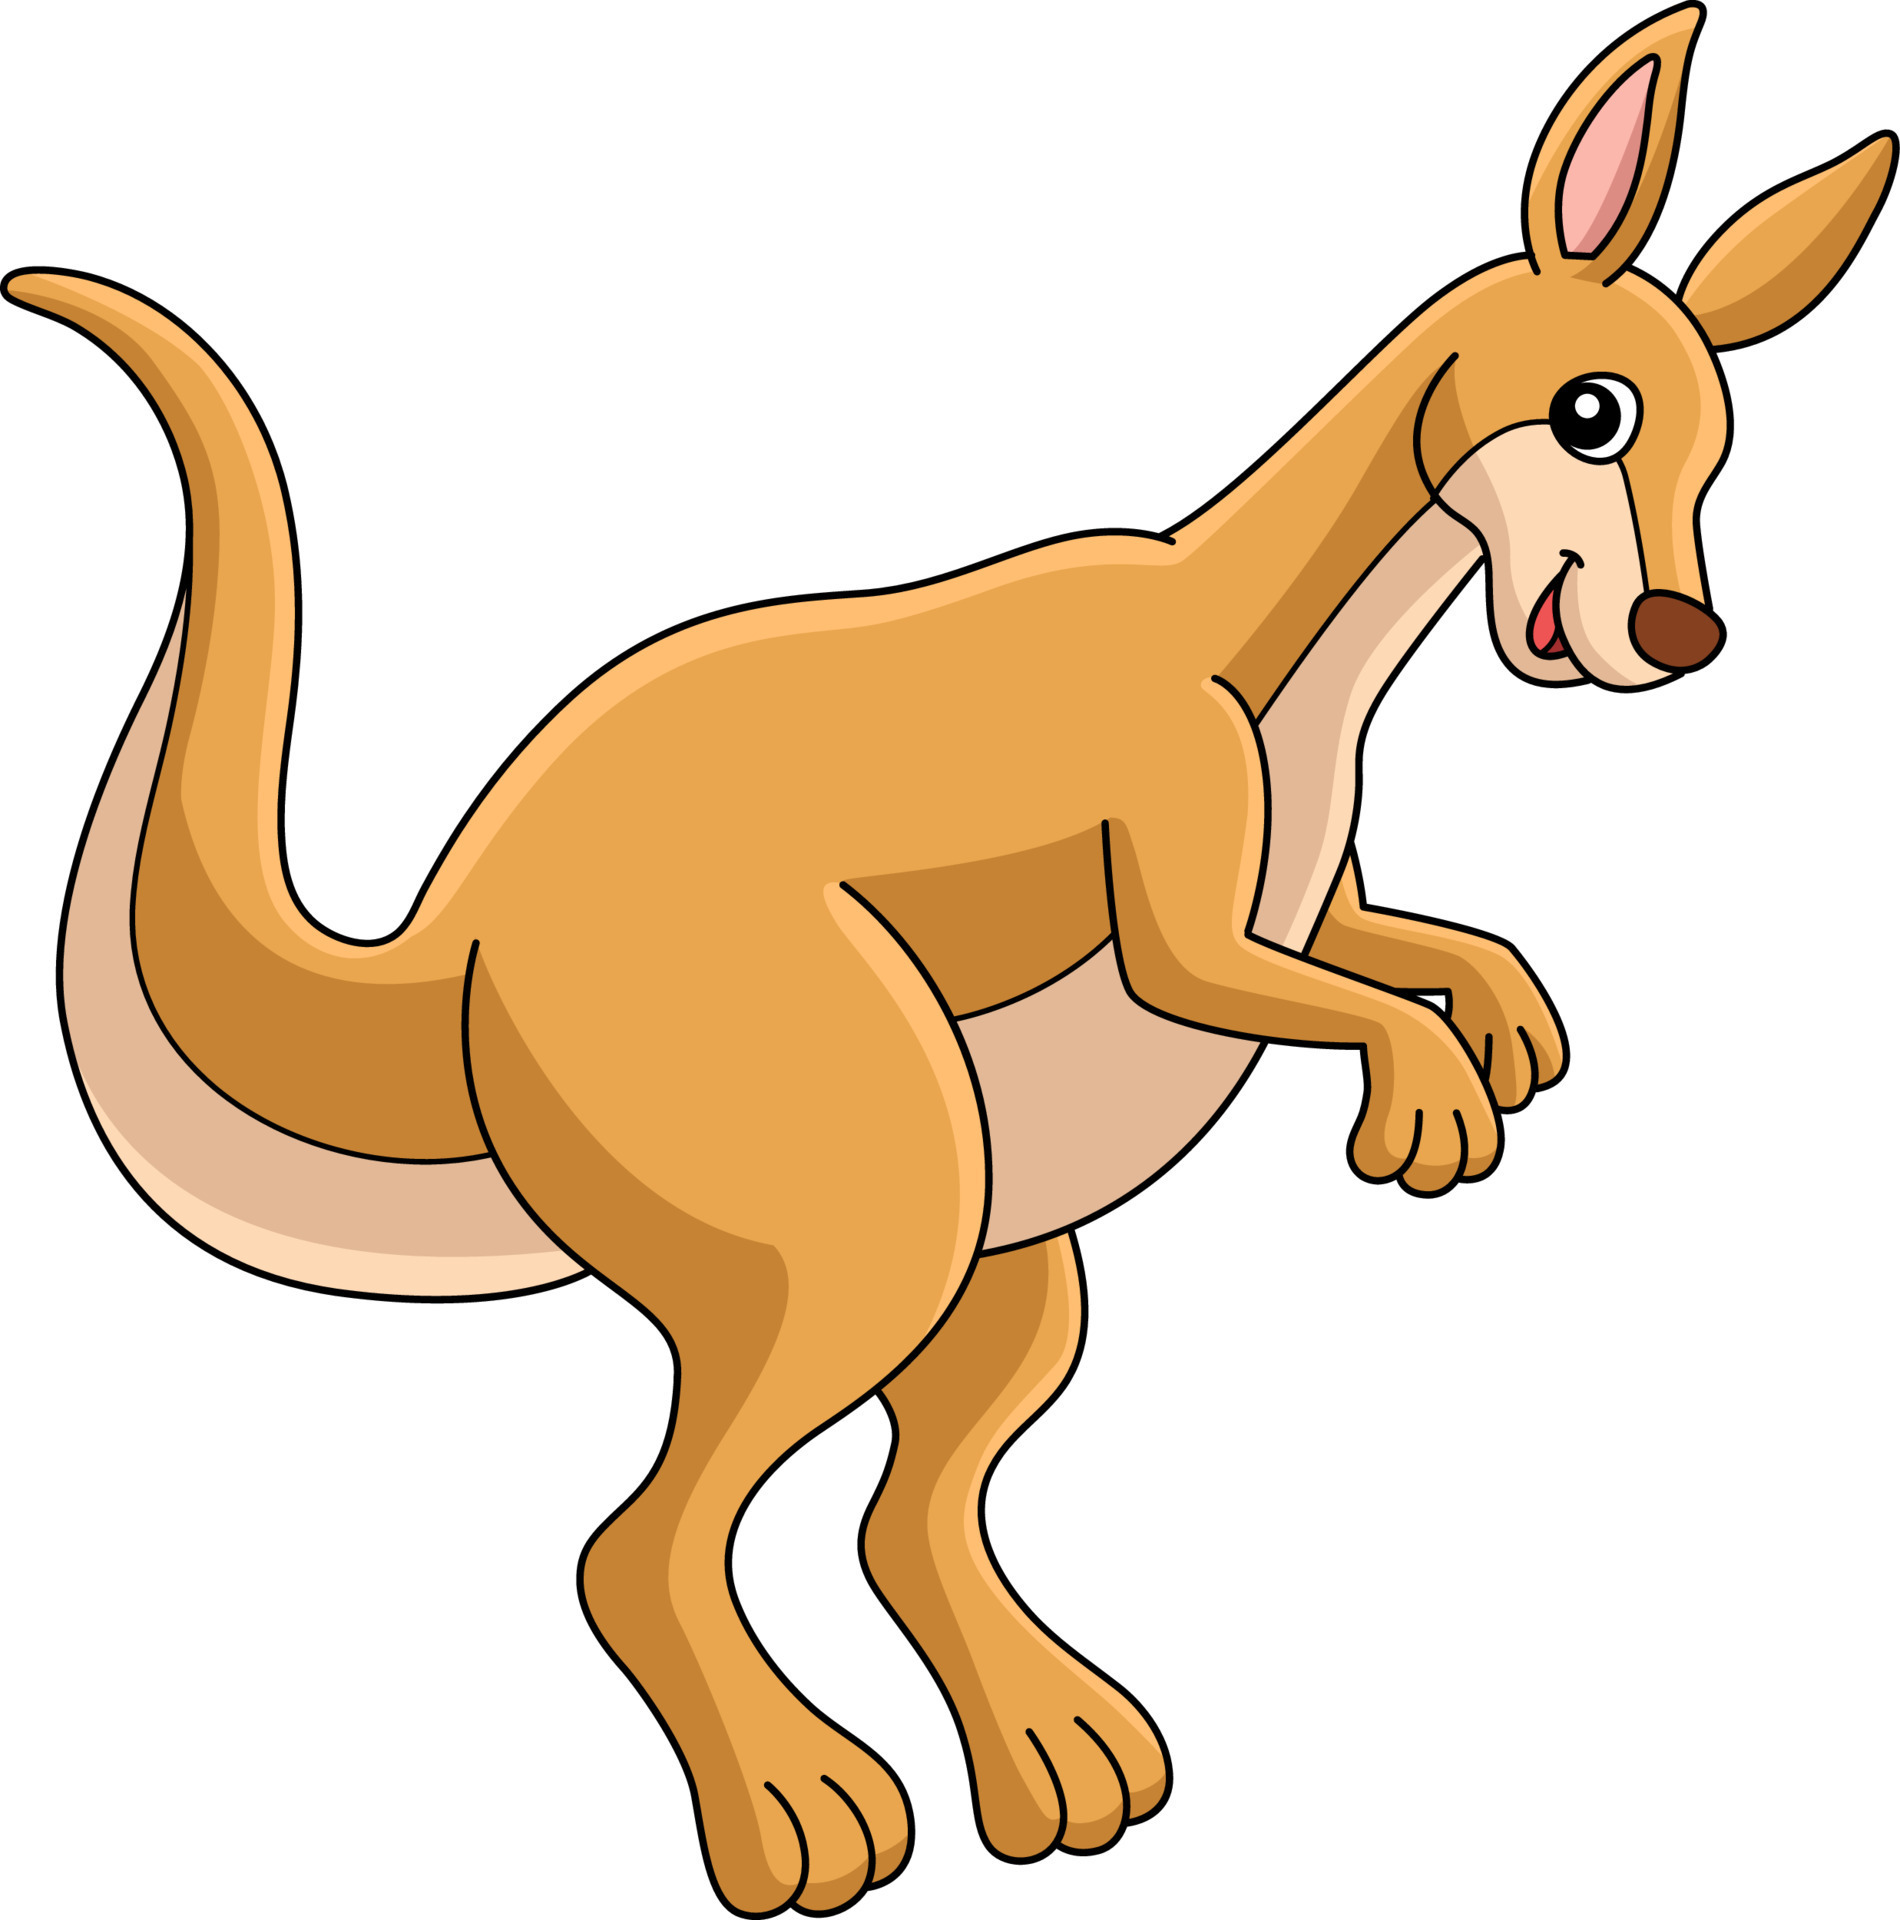 Kangaroo Animal Colored Cartoon Illustration 7528353 Vector Art at Vecteezy